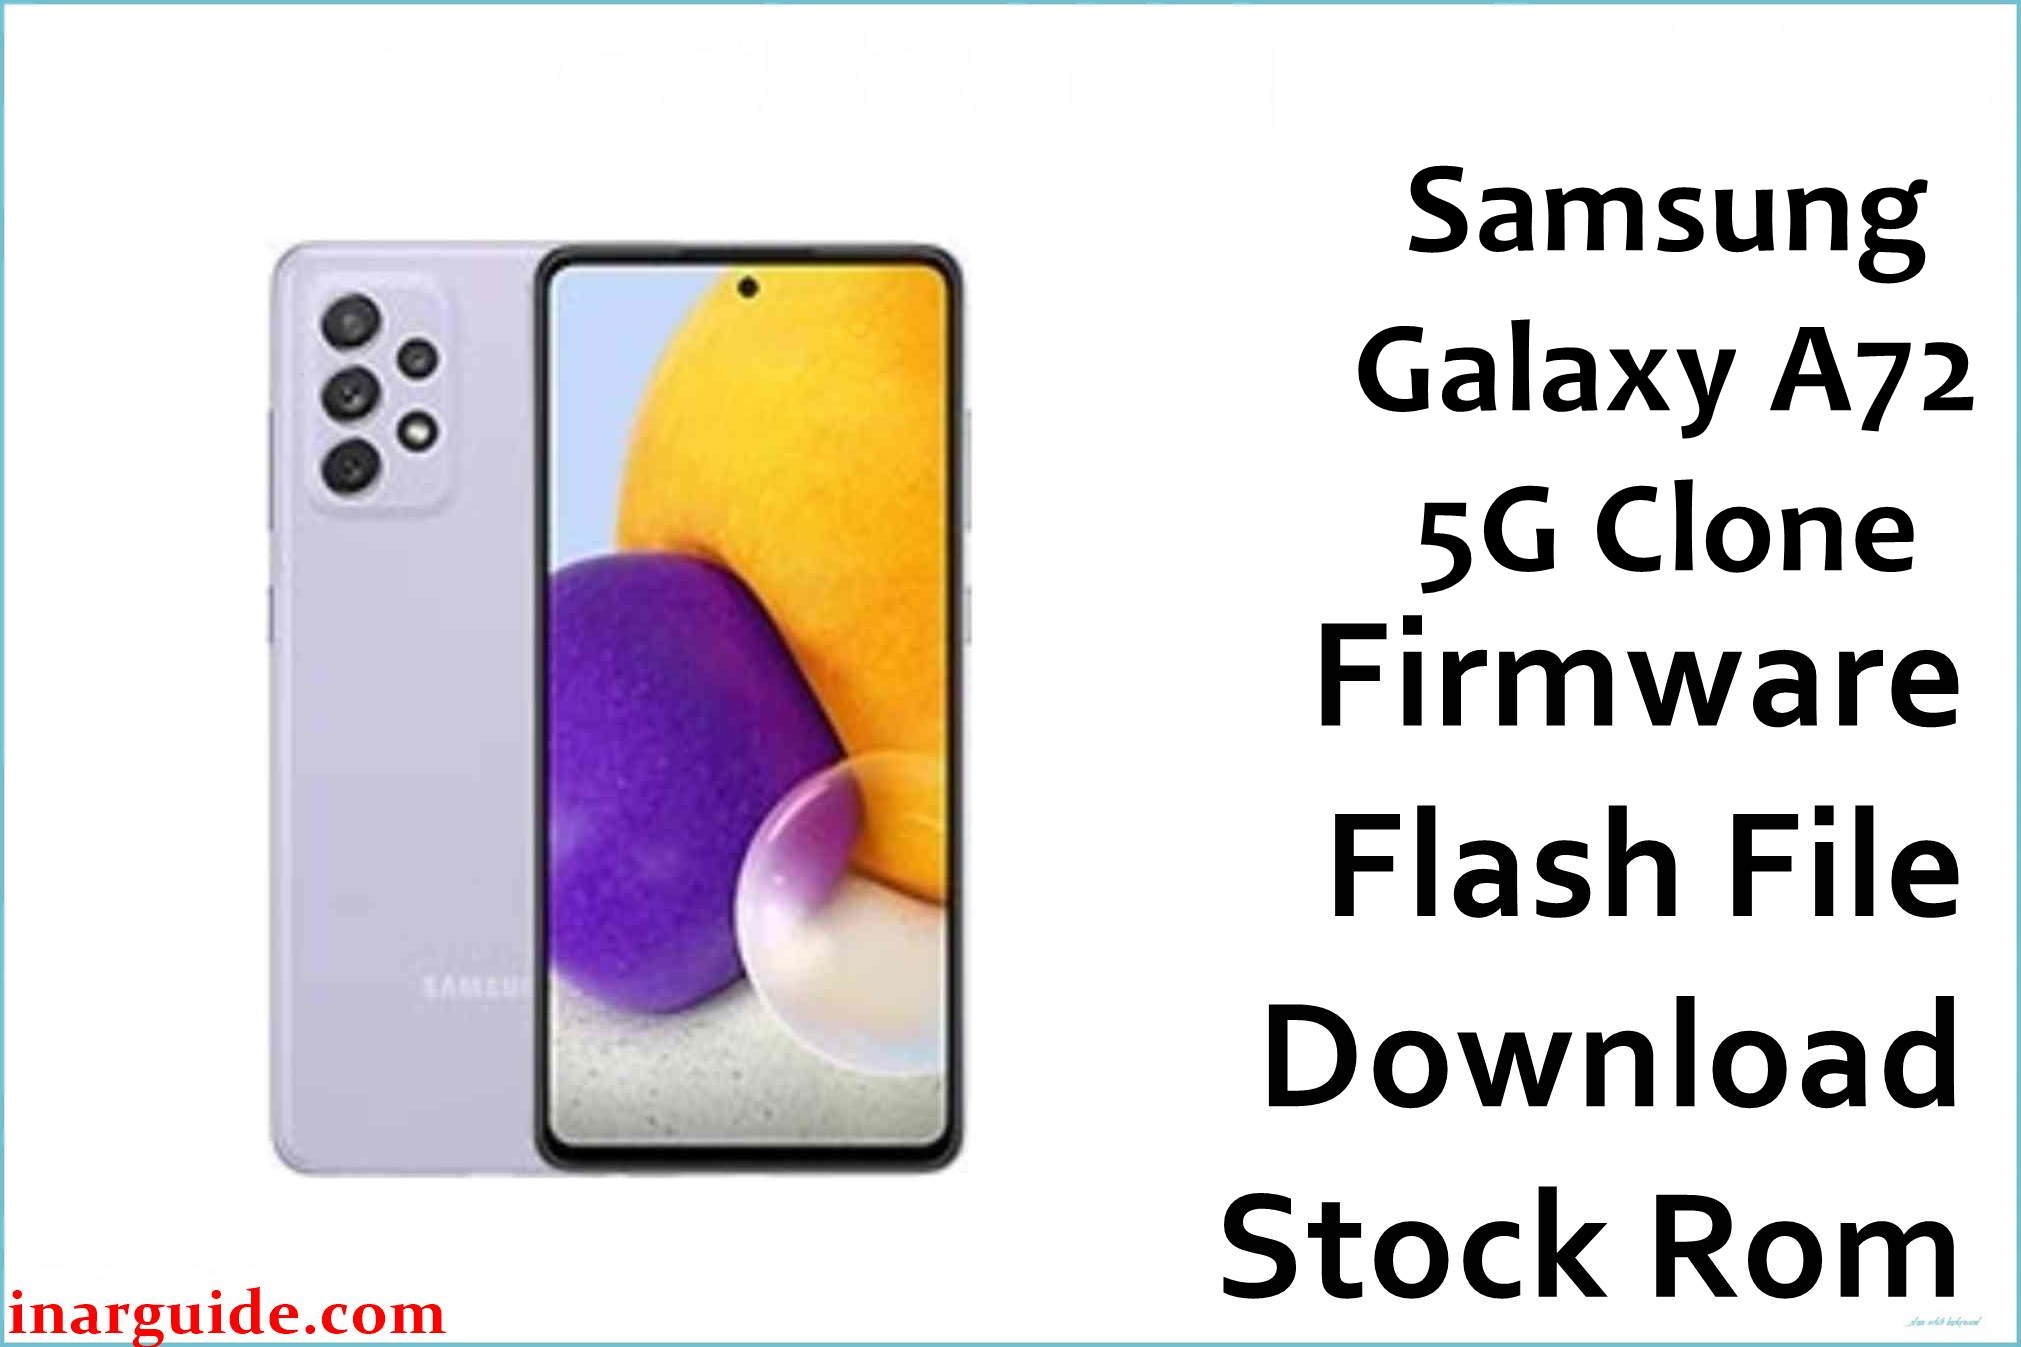 Samsung Galaxy A72 5G Clone